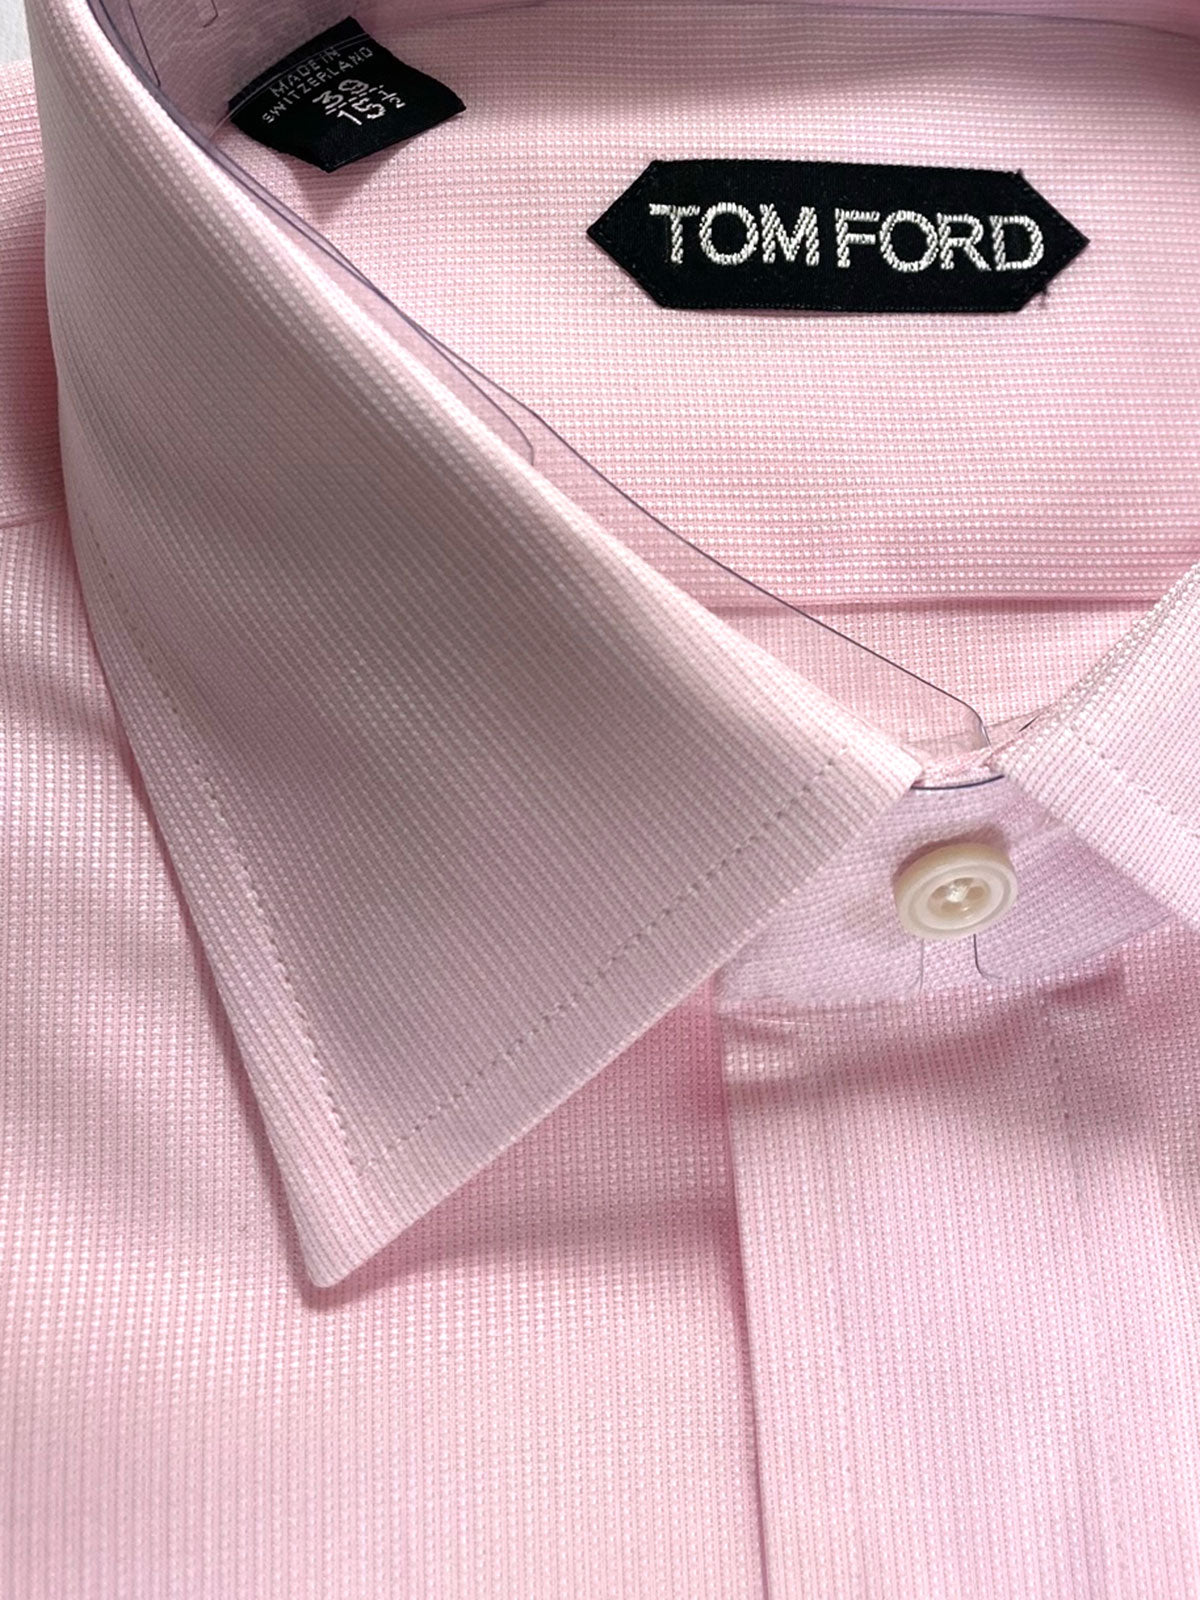 Tom Ford Dress Shirt Pink Grosgrain Modern Fit 39 - 15 1/2